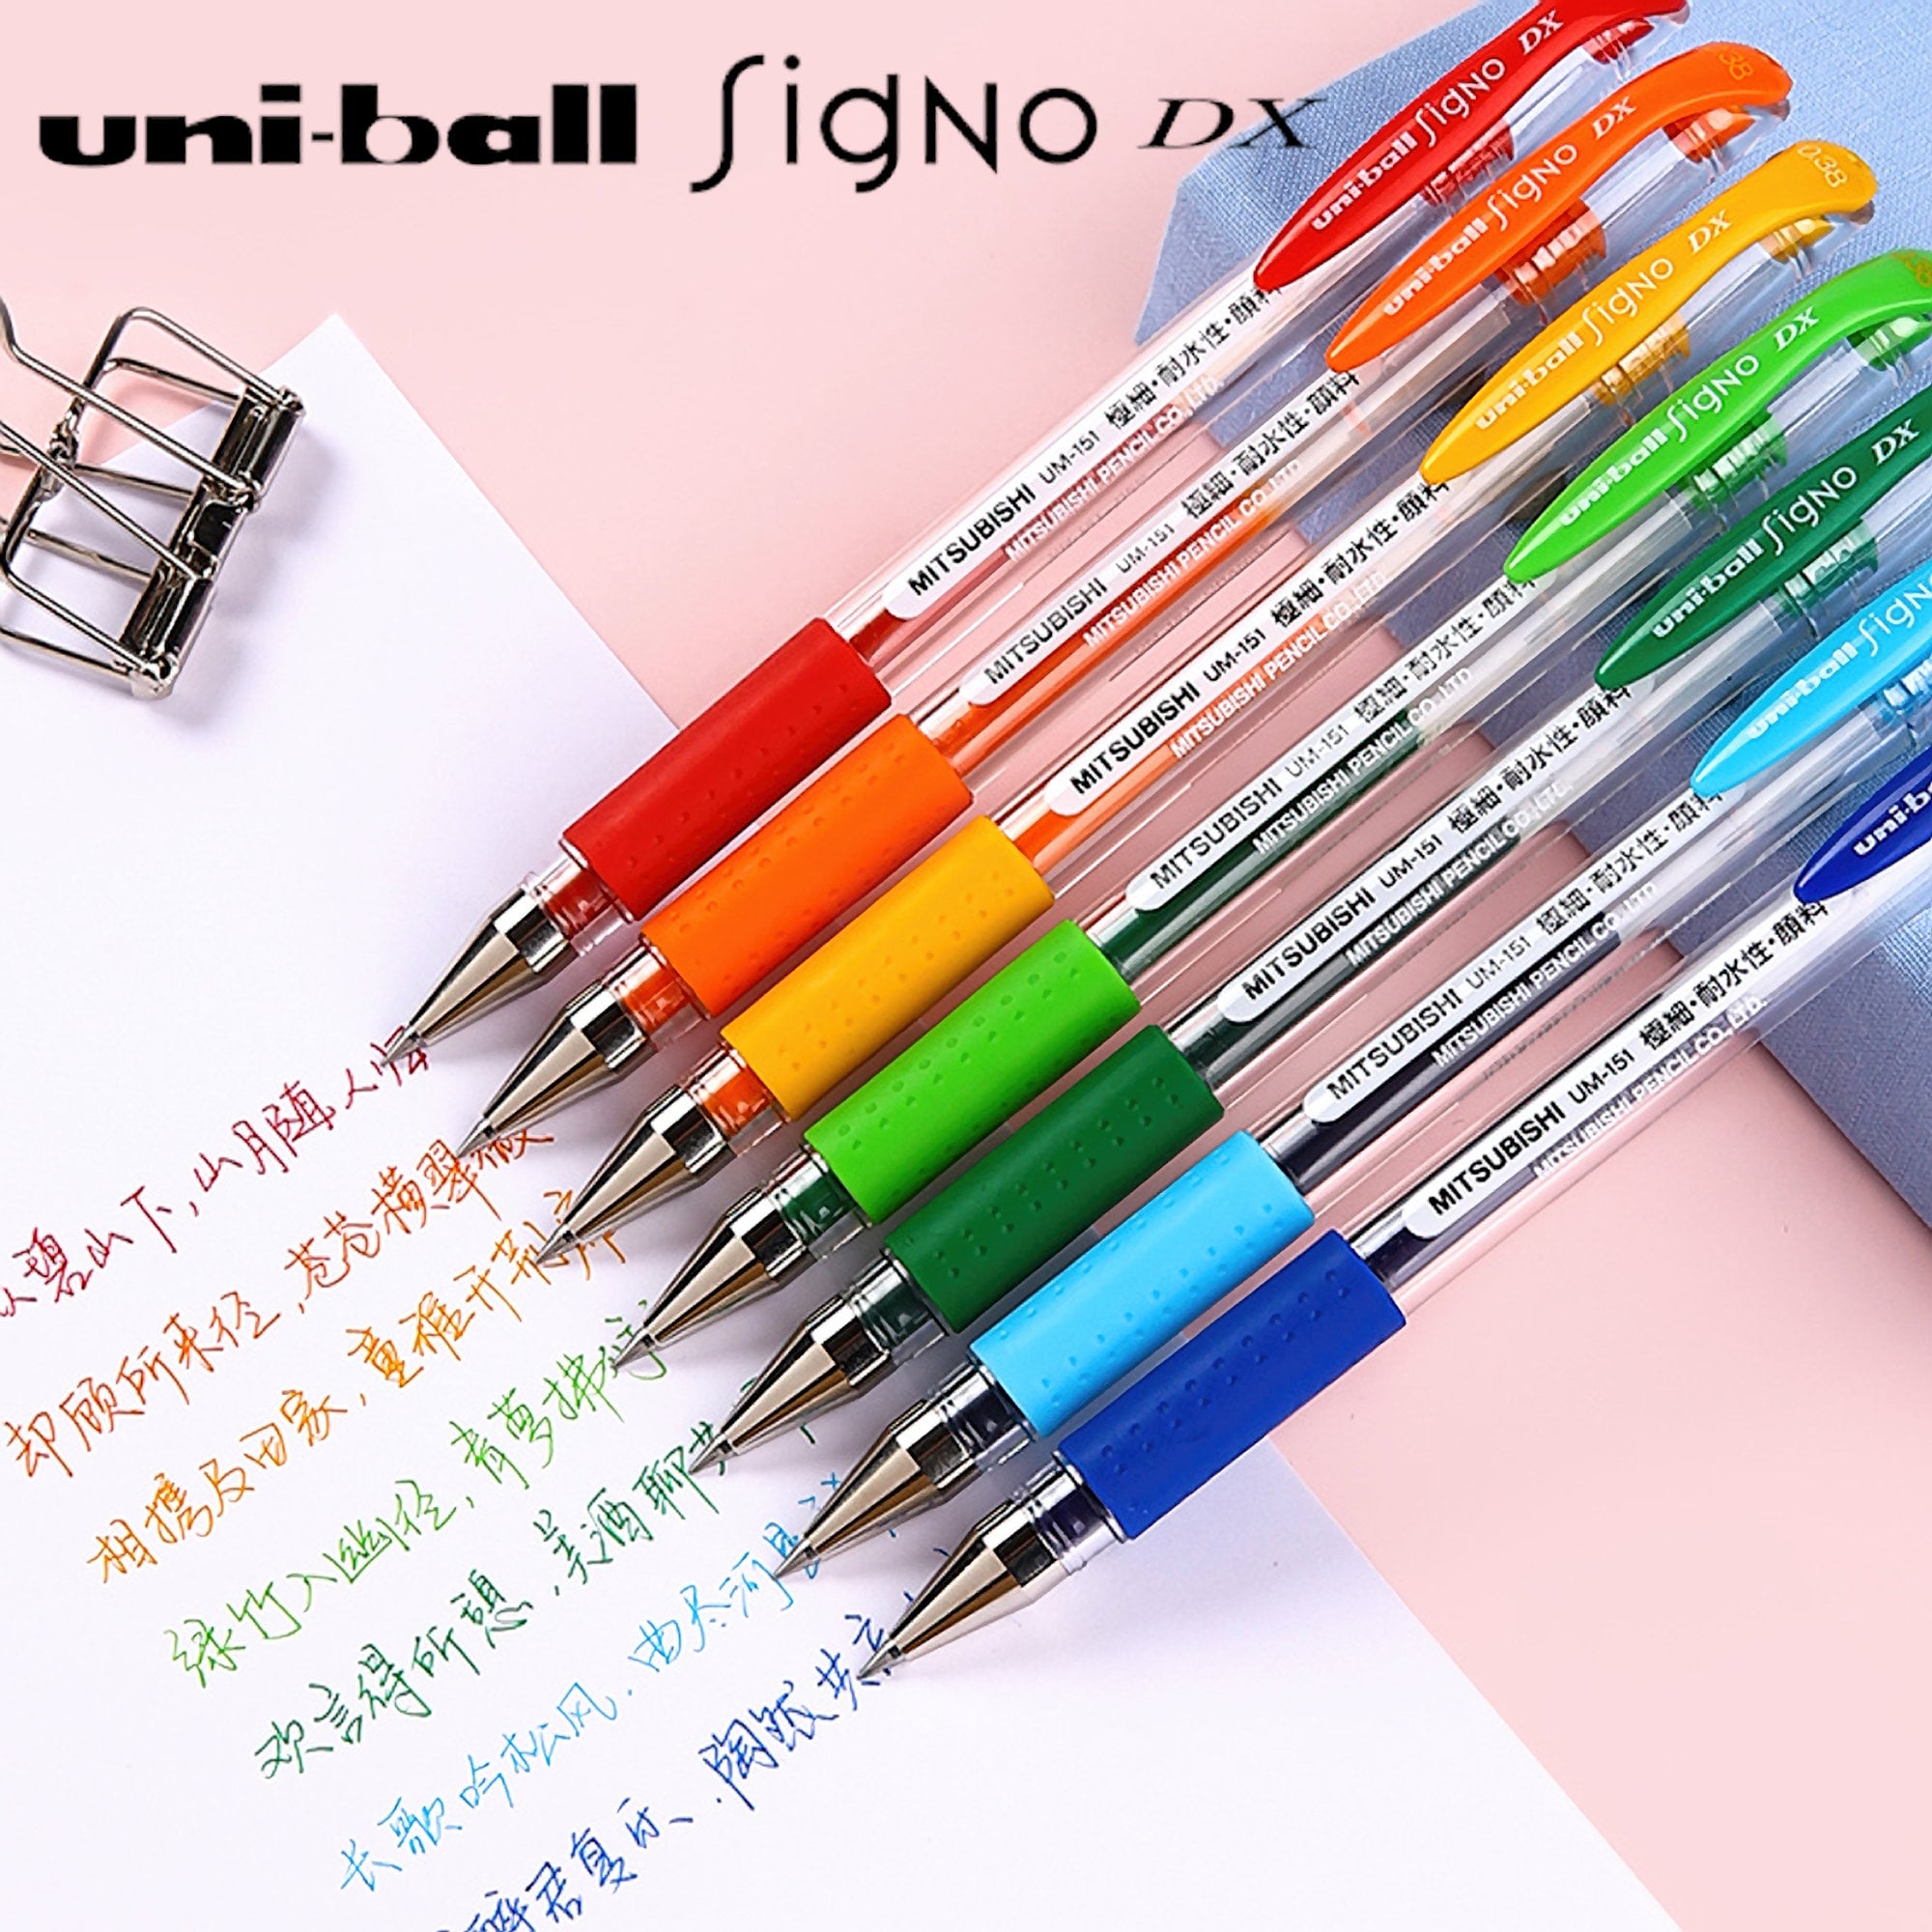 free shipment 5 pcs Uni-ball Signo DX UM-151 0.38mm gel pen GREEN ink